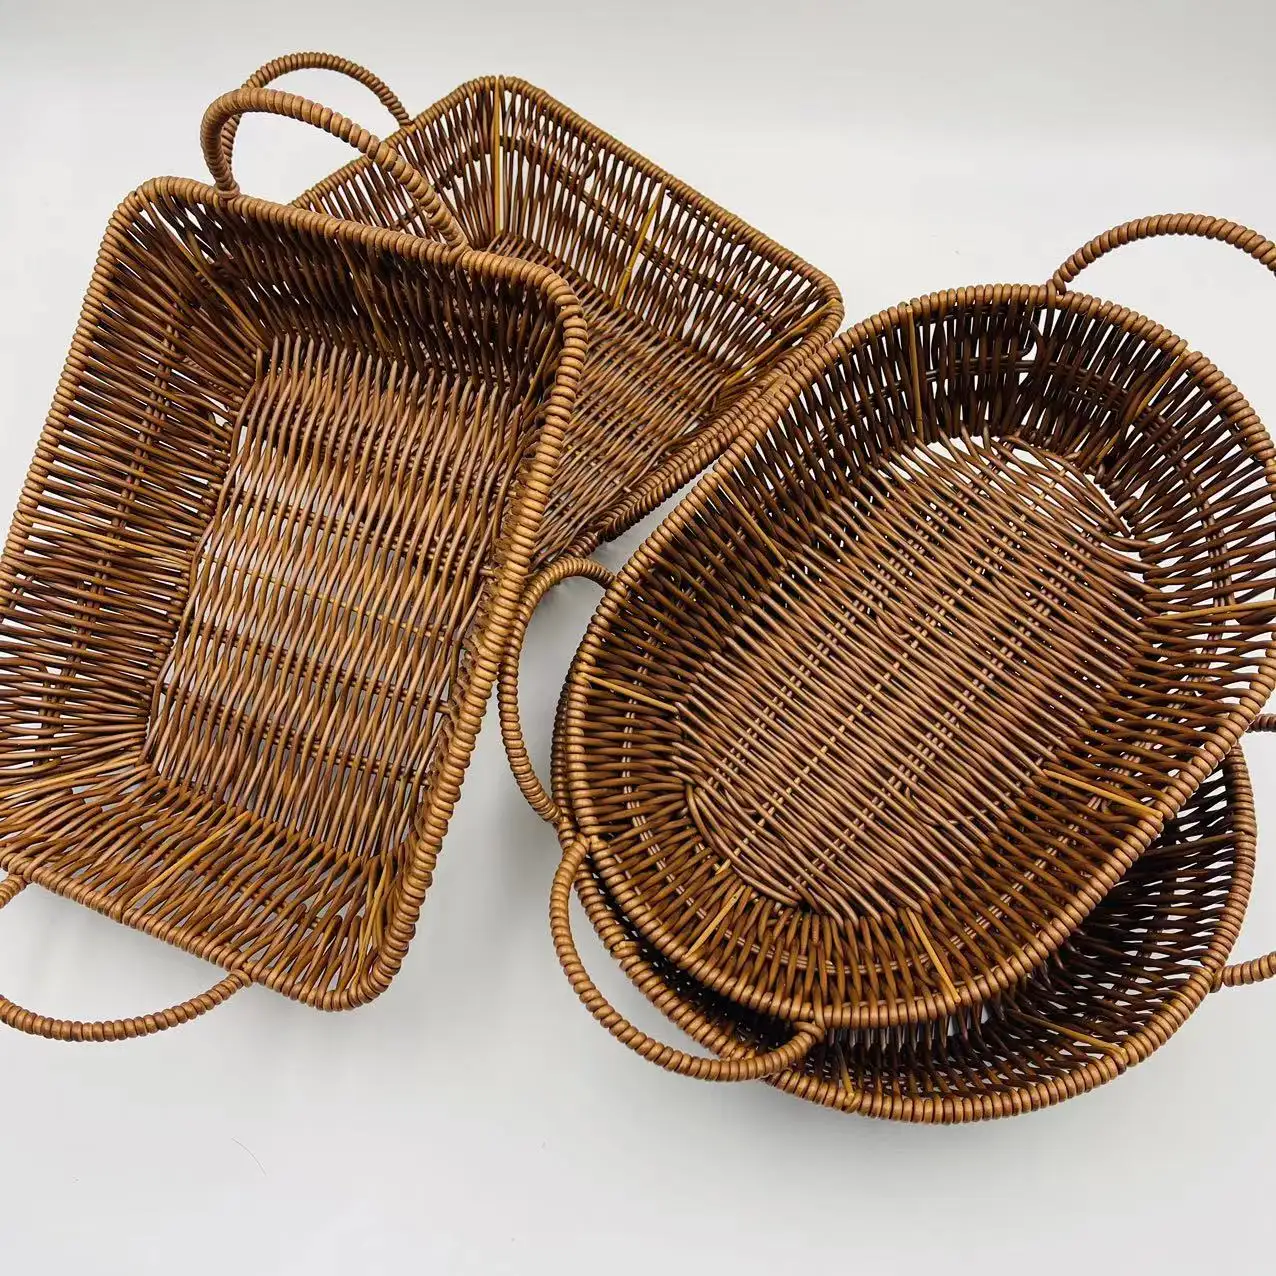 Hochwertige Wicker Stapelbare Aufbewahrung körbe Rattan Basket Weaving Craft Rattan Tray